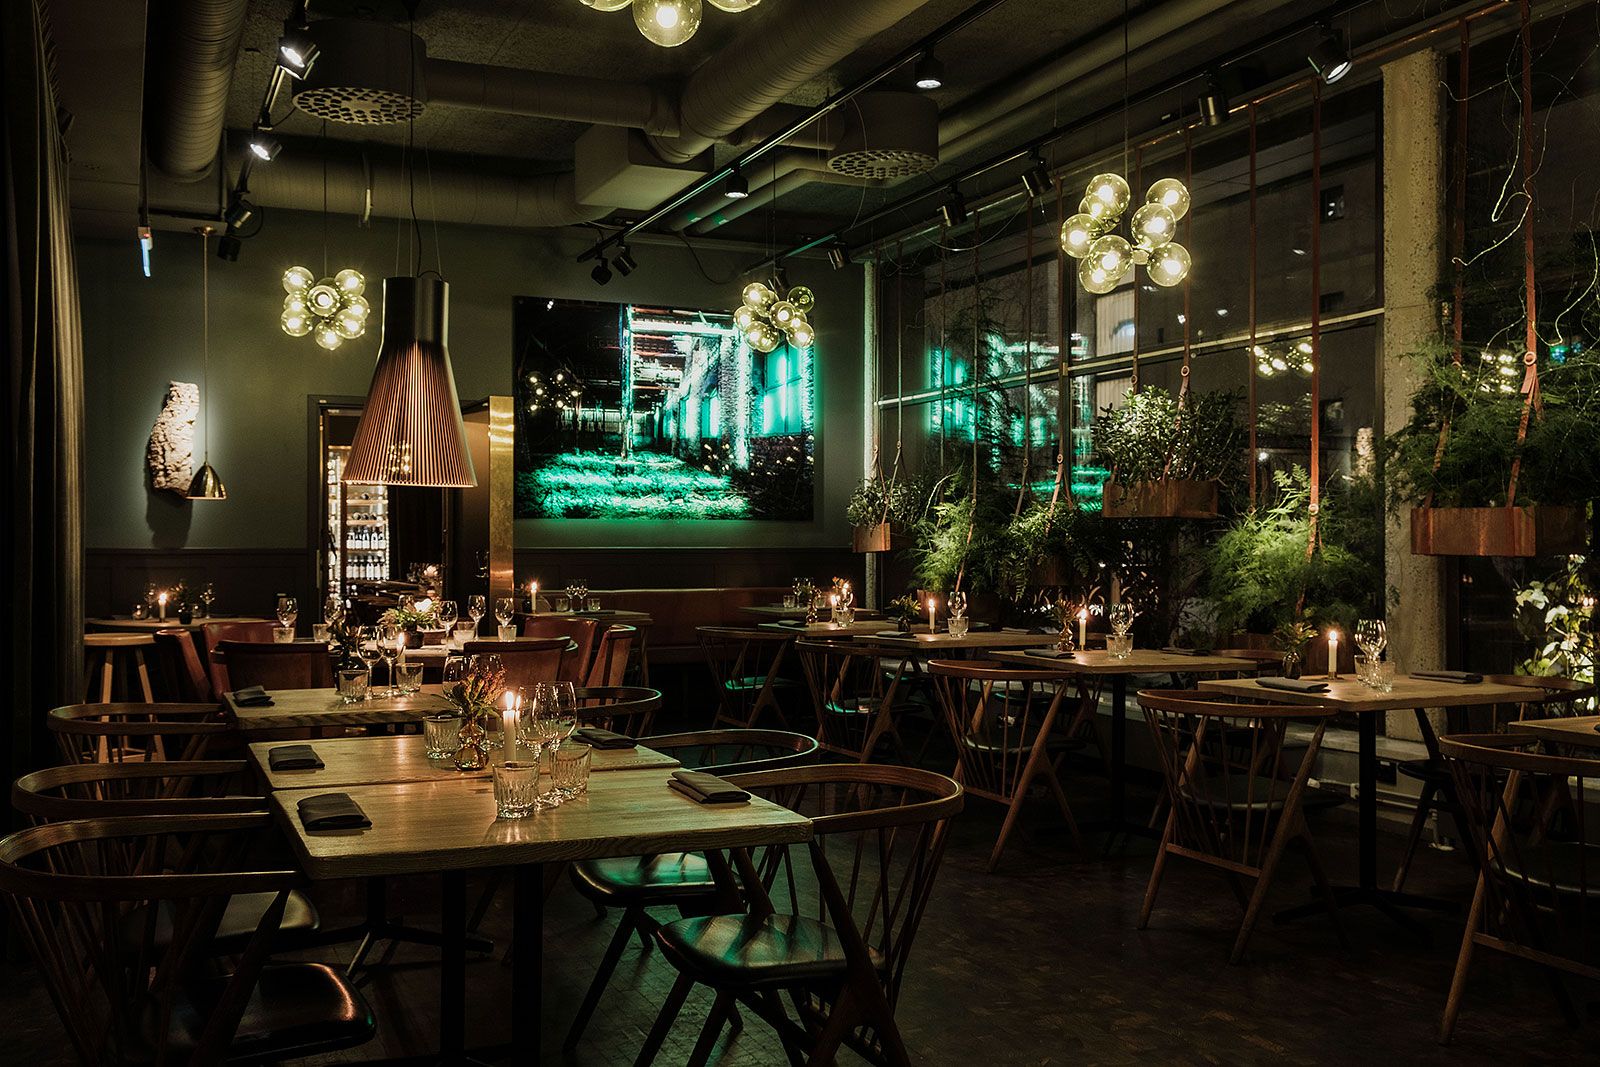 Restaurang Hantverket – 48 timmar i Stockholm